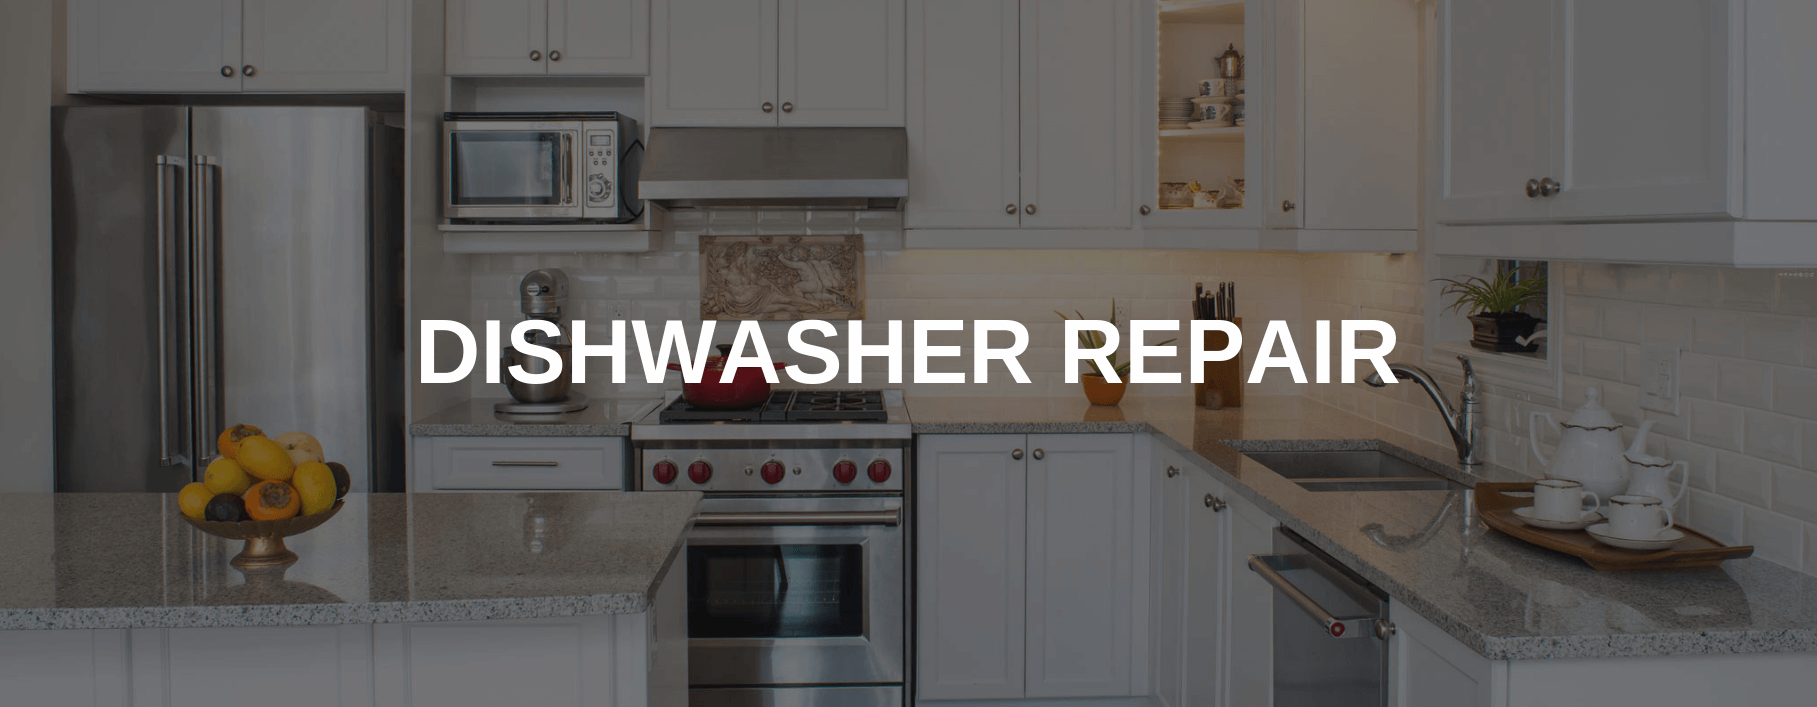 dishwasher repair madison